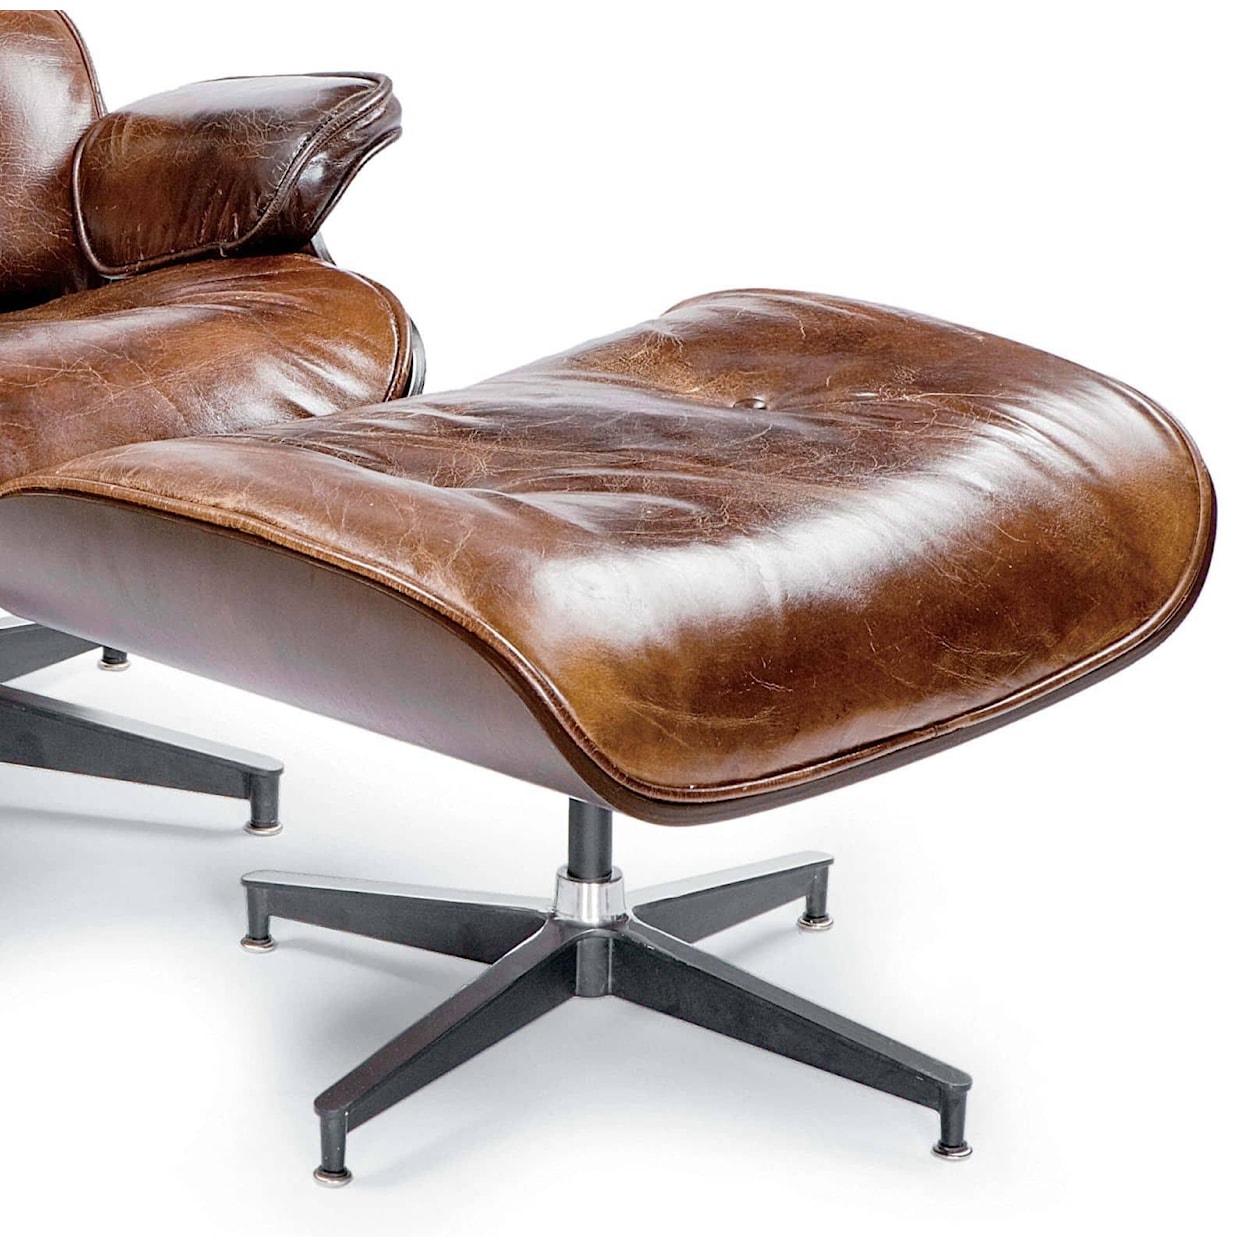 Regina-Andrew Design Chairs Barca Lounge & Ottoman